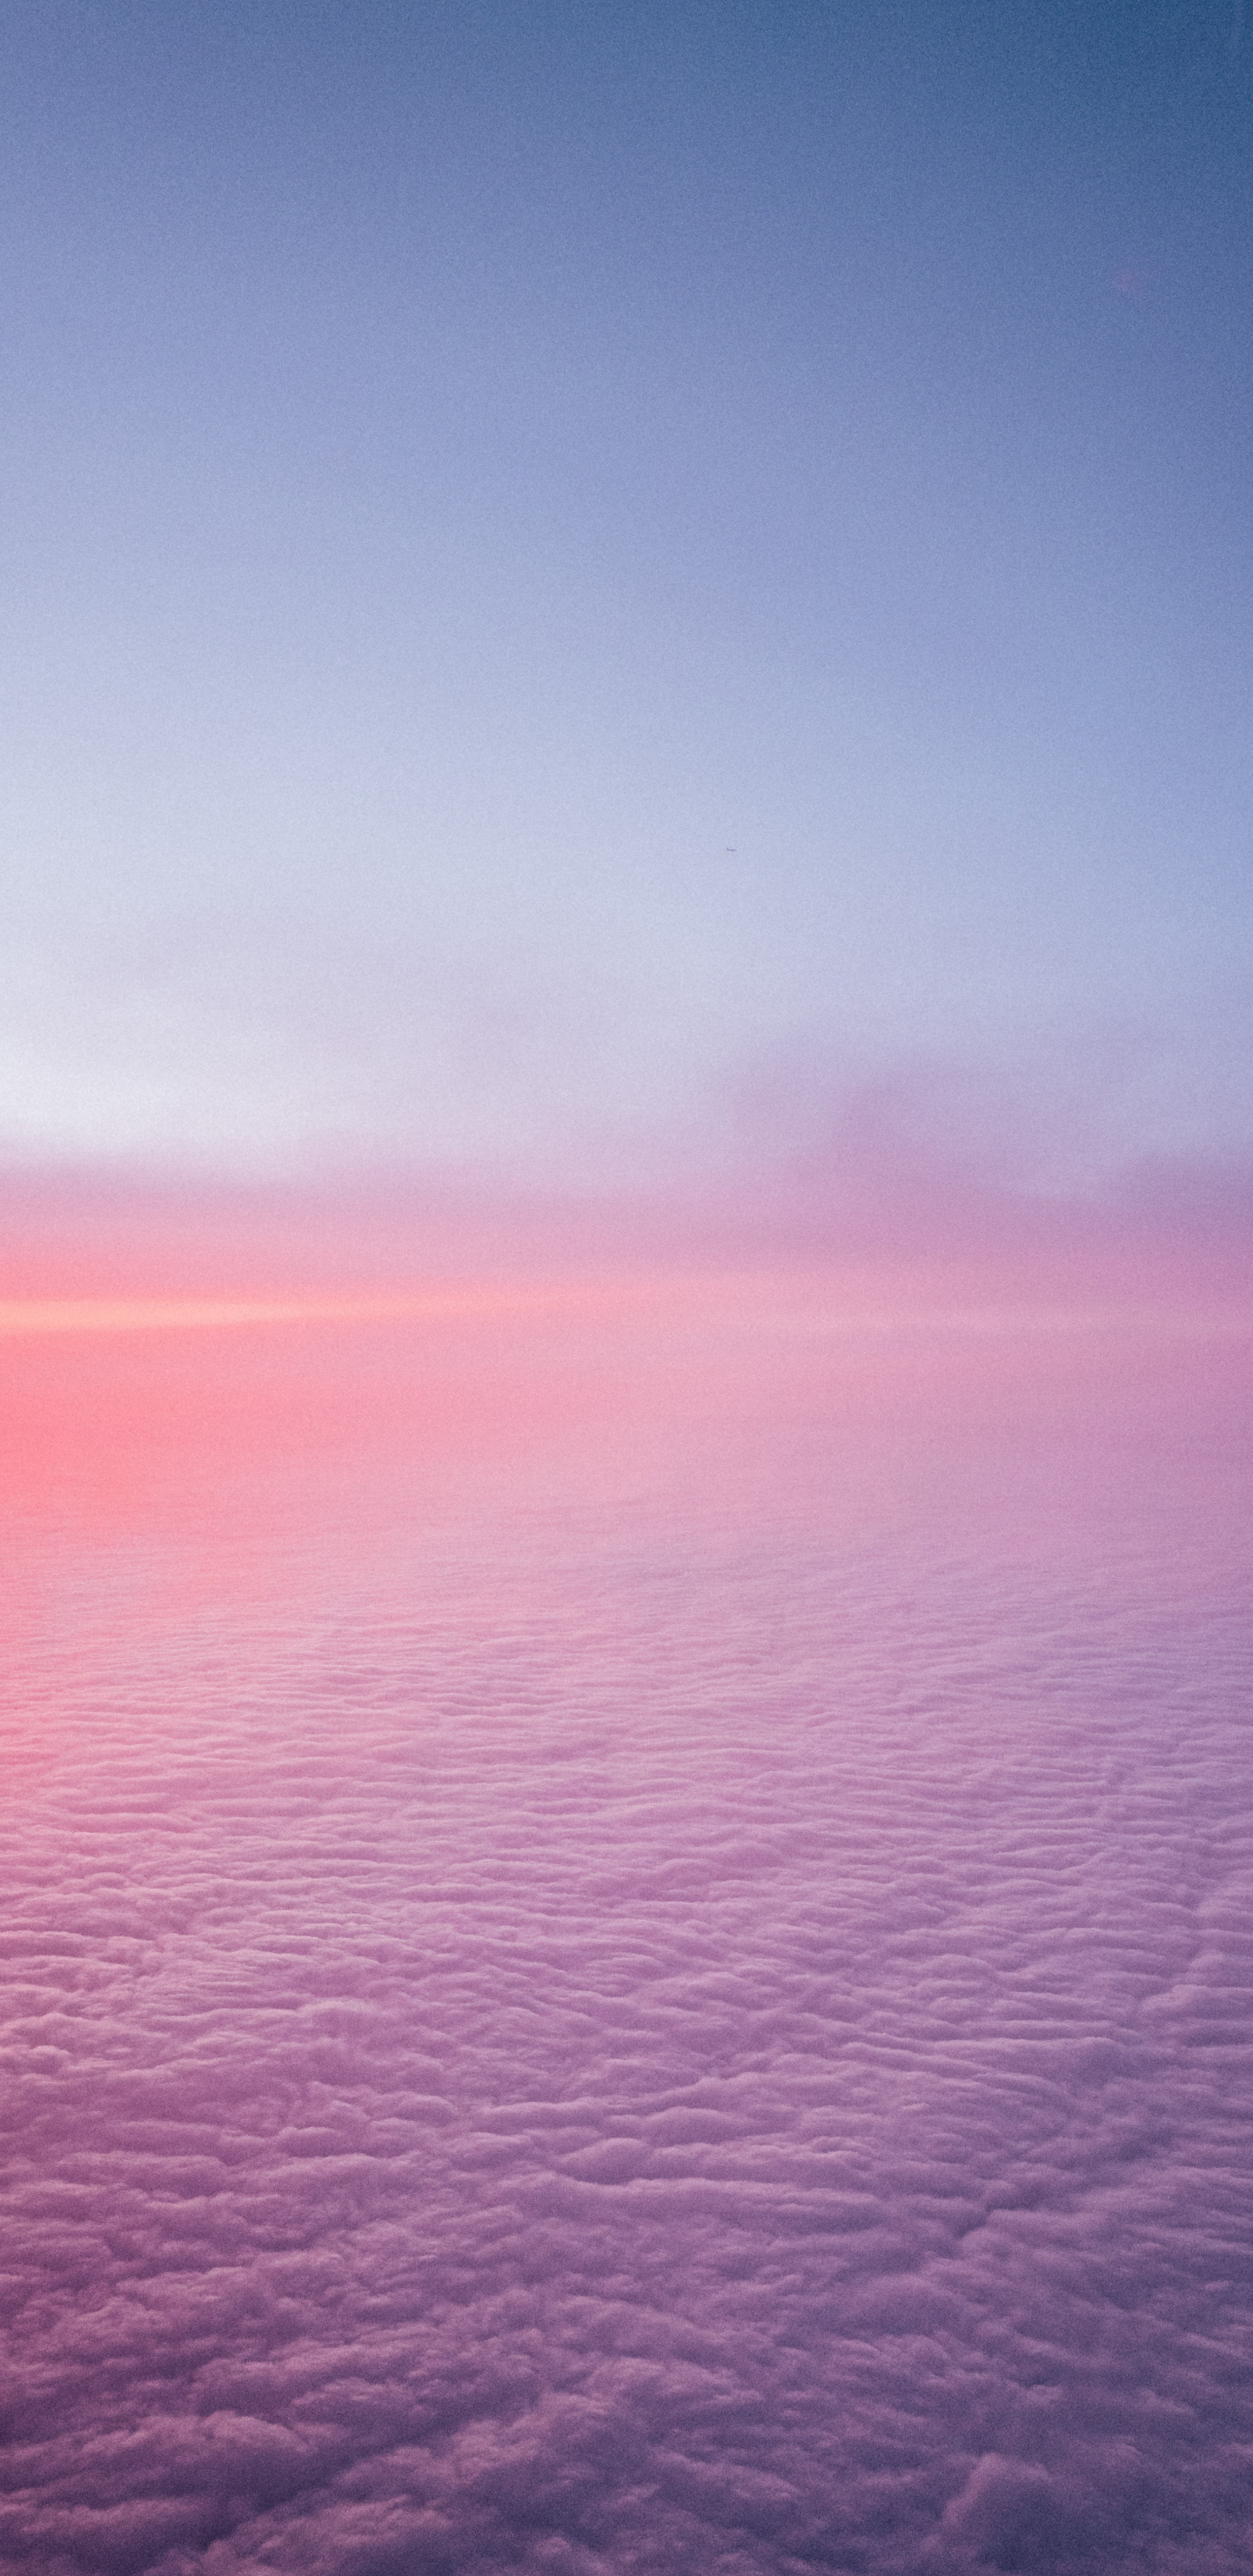 Download Pinkish sky, clouds wallpaper, 1440x Samsung Galaxy S Samsung Galaxy S8 Plus